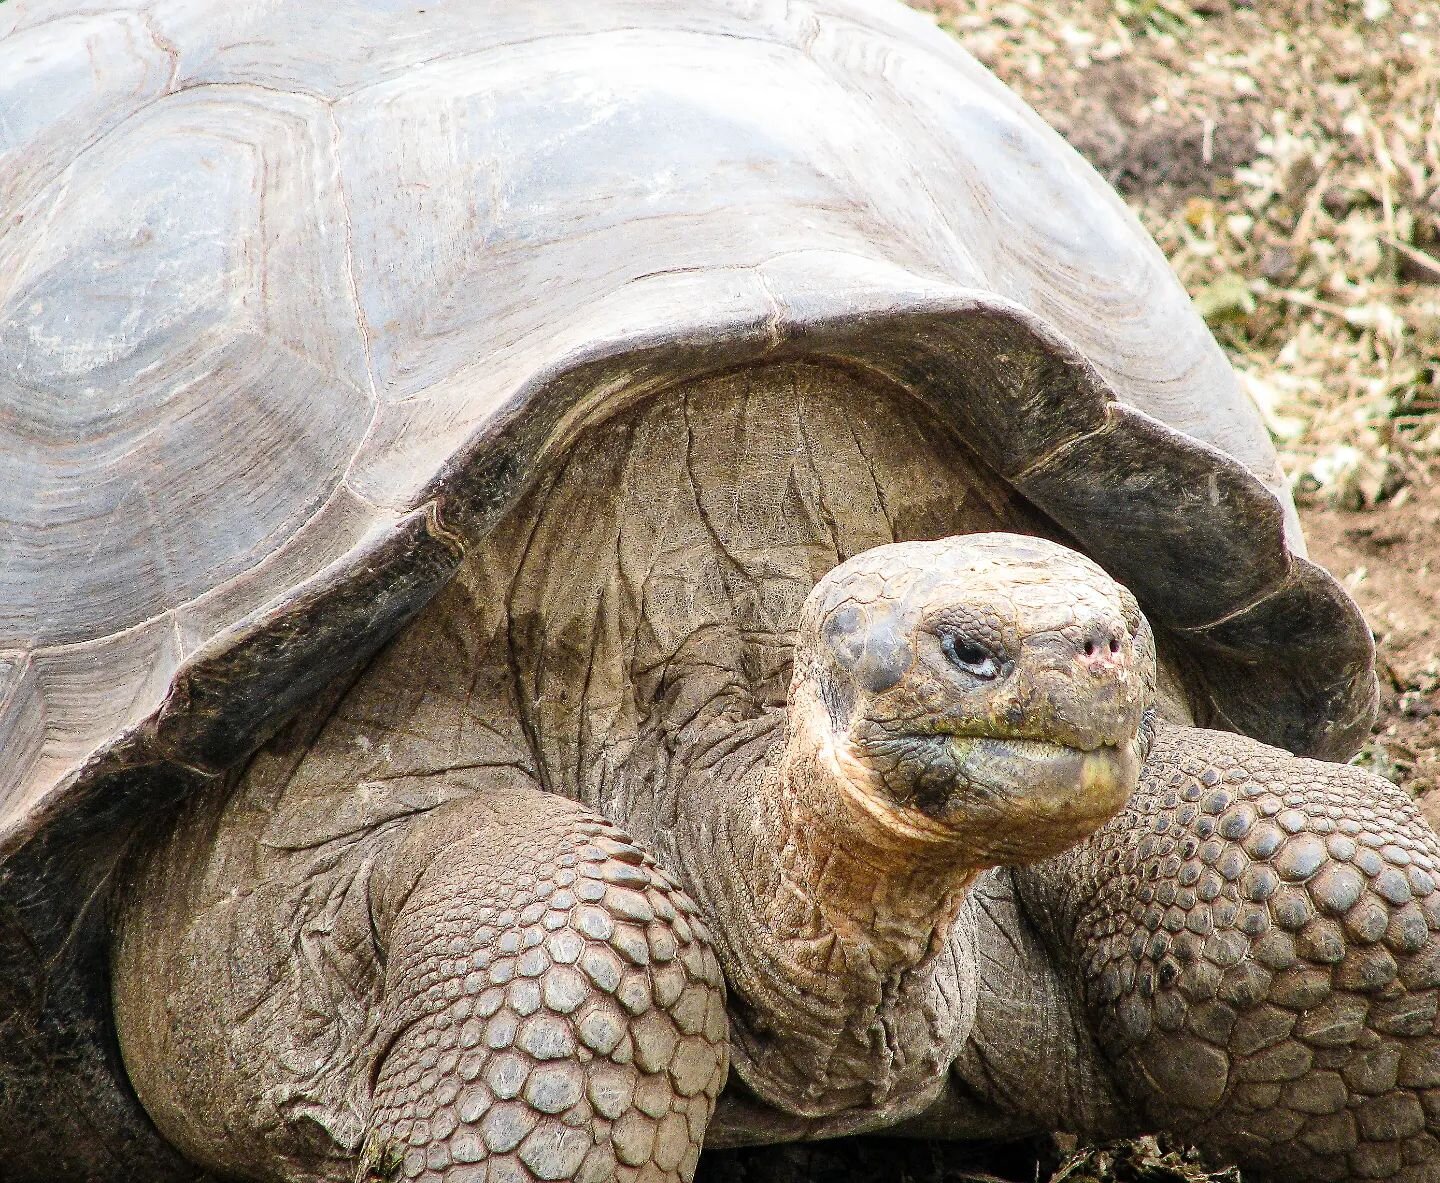 The emblematic Galapagos Giant Tortoise to be found in the highlands of Santa Cruz Island in its natural habitat 🐢

#galapagos #island #islasgalapagos #wildlifephotography #gianttortoise #bucketlist #ecoturismo #tortugagigante